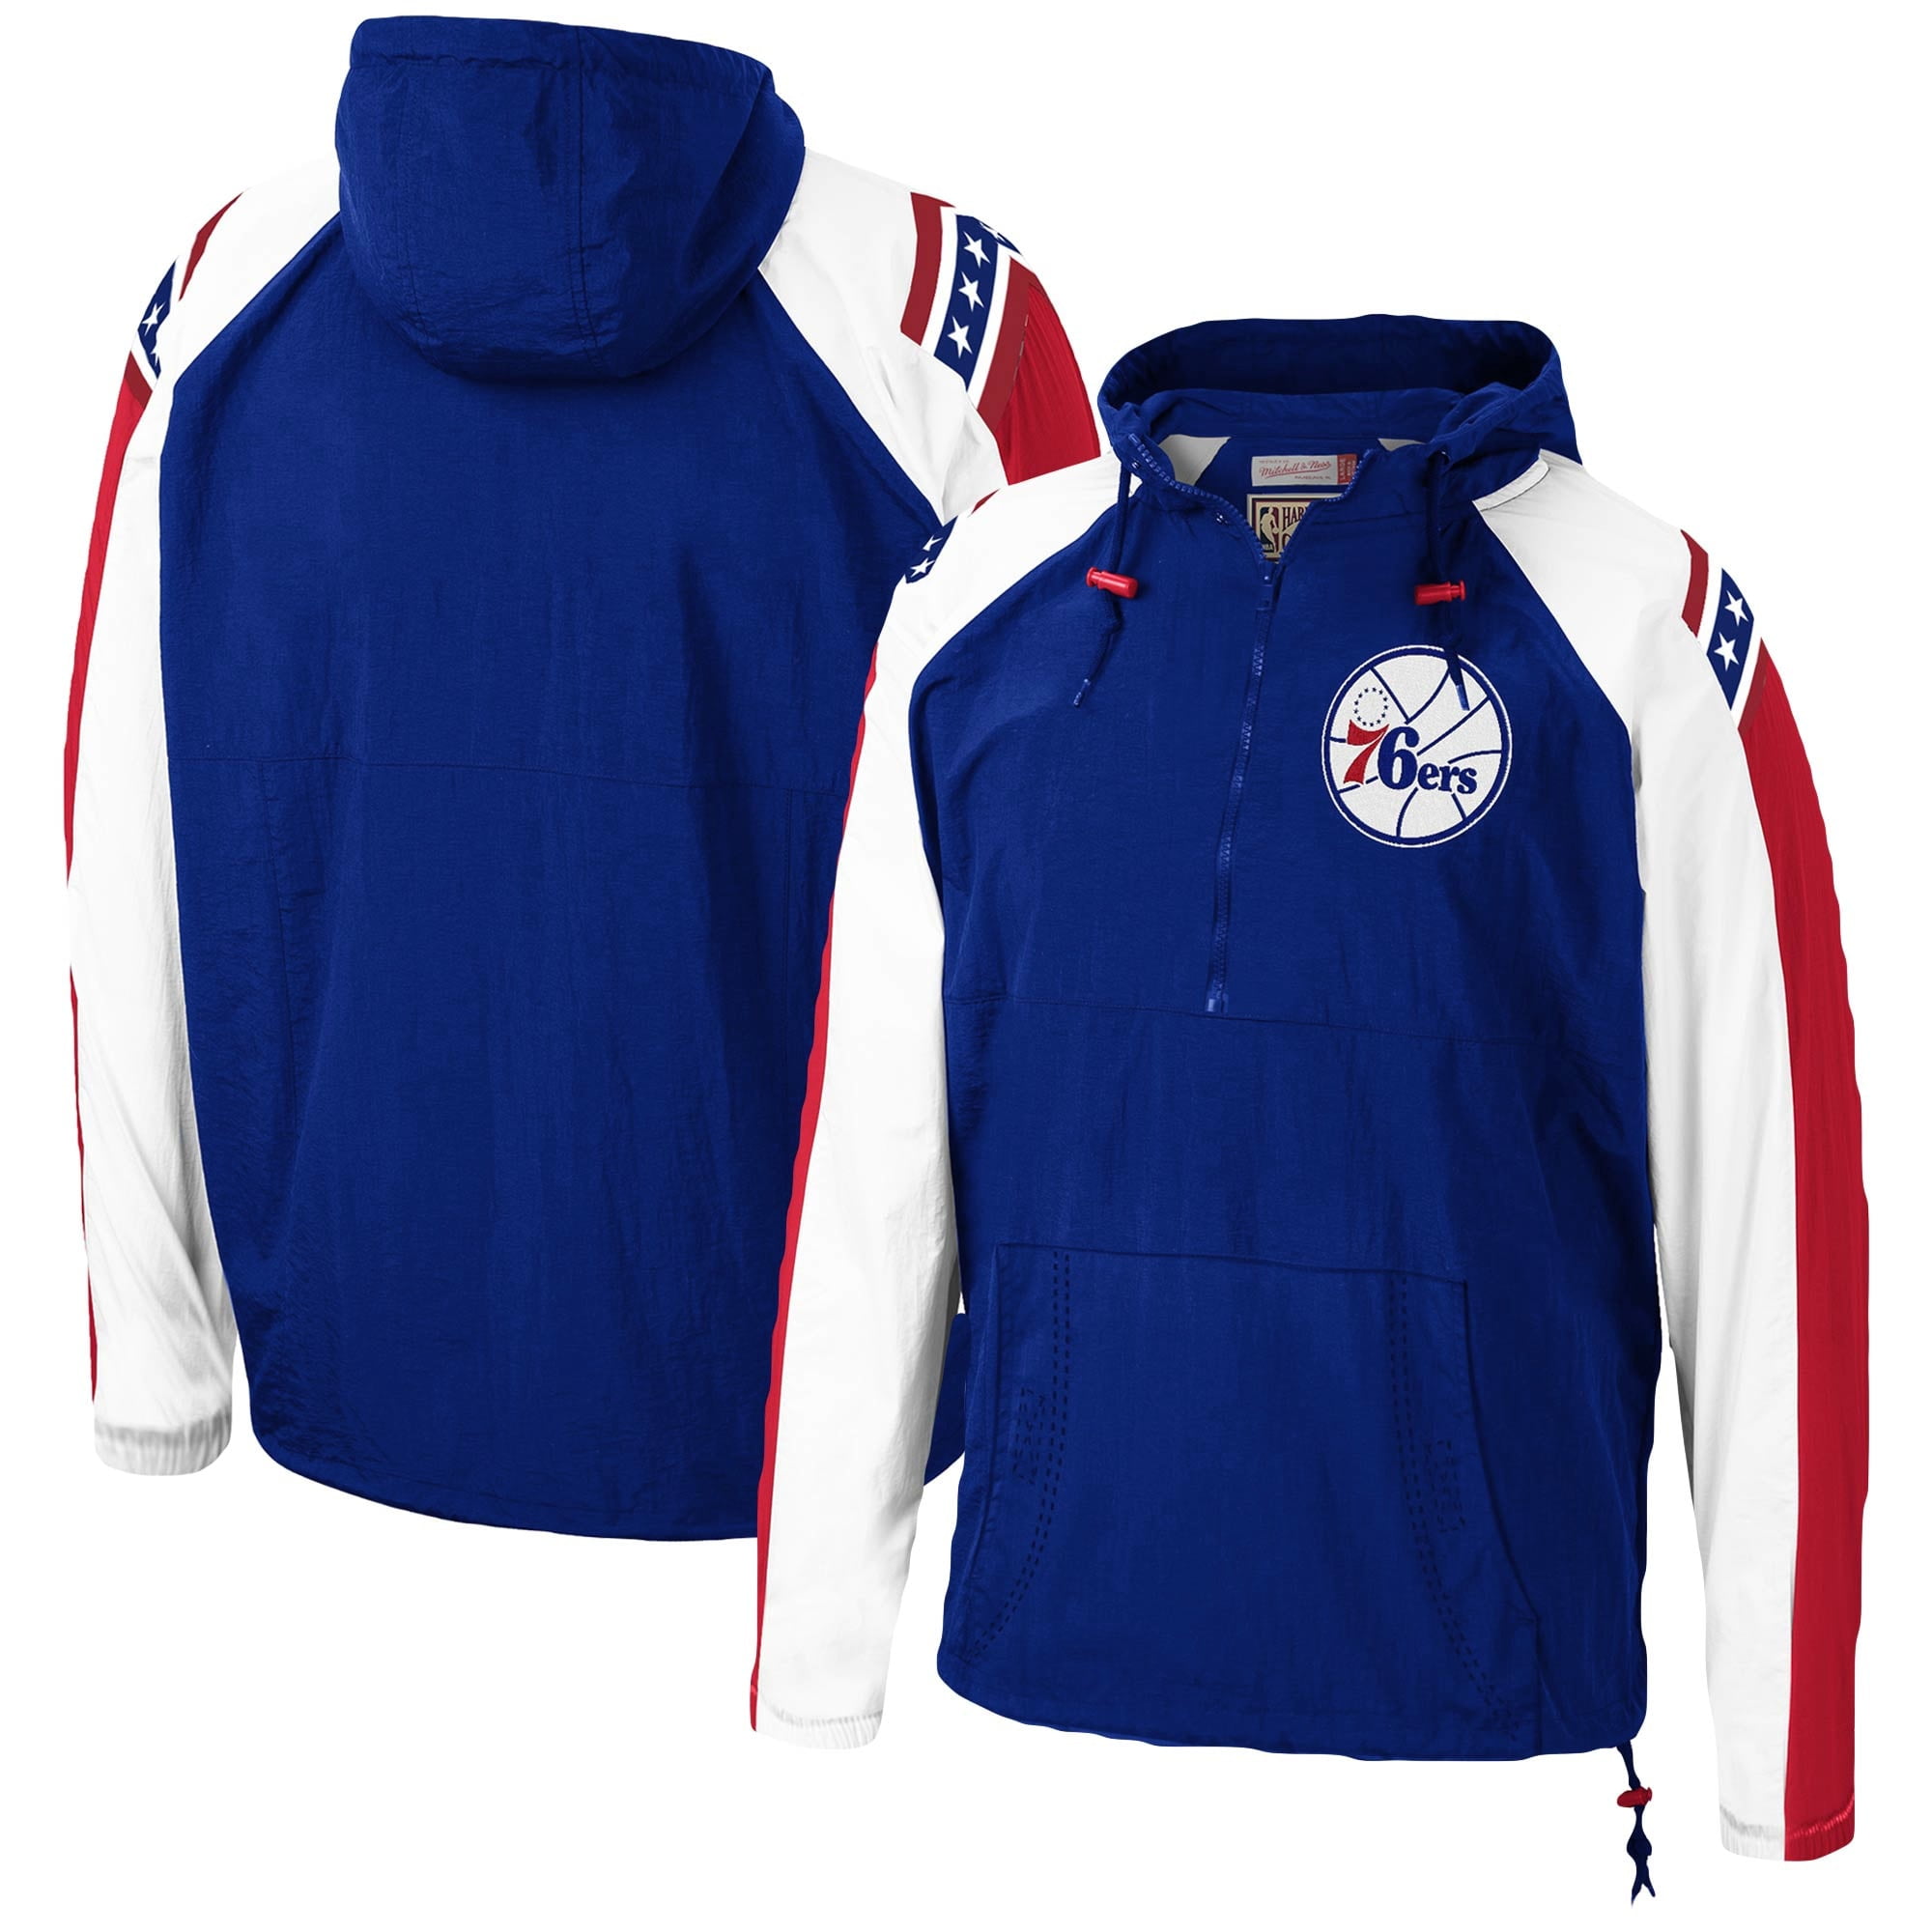 76ers hardwood classic hoodie